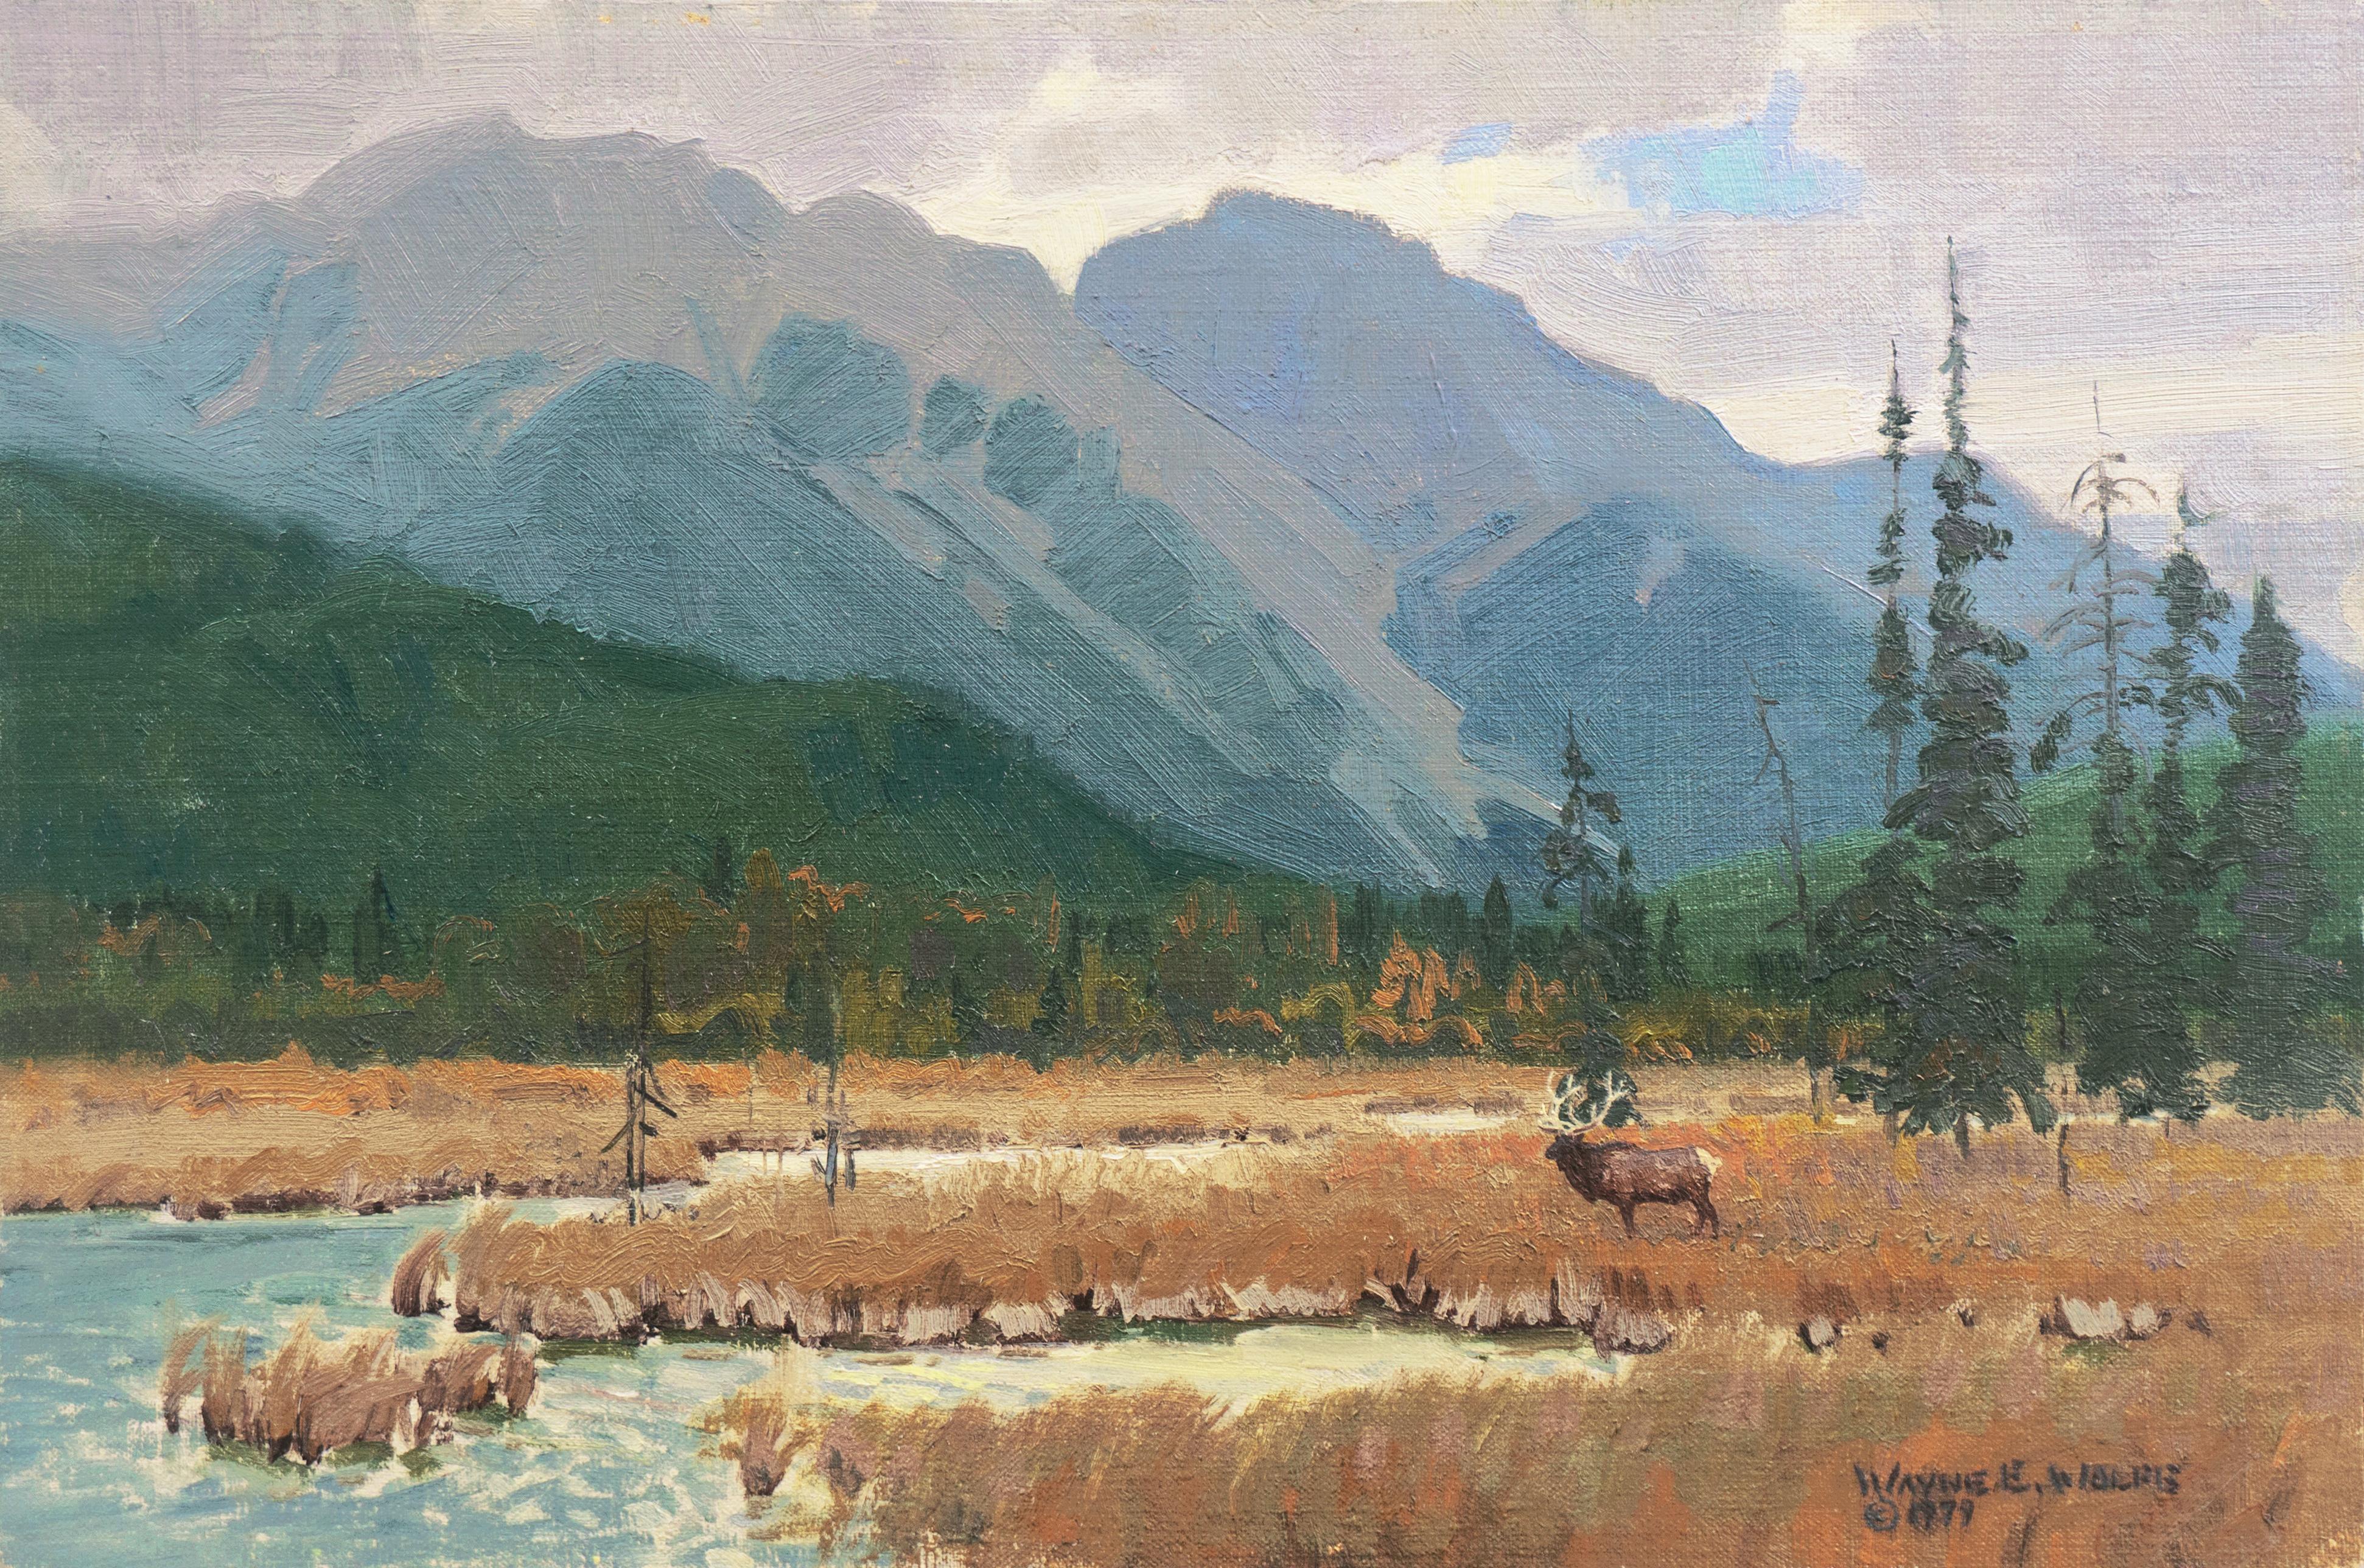 Wayne Wolfe Landscape Painting - 'Elk Grazing, Rocky Mountains', Colorado, Prix de West, Gilcrease Museum